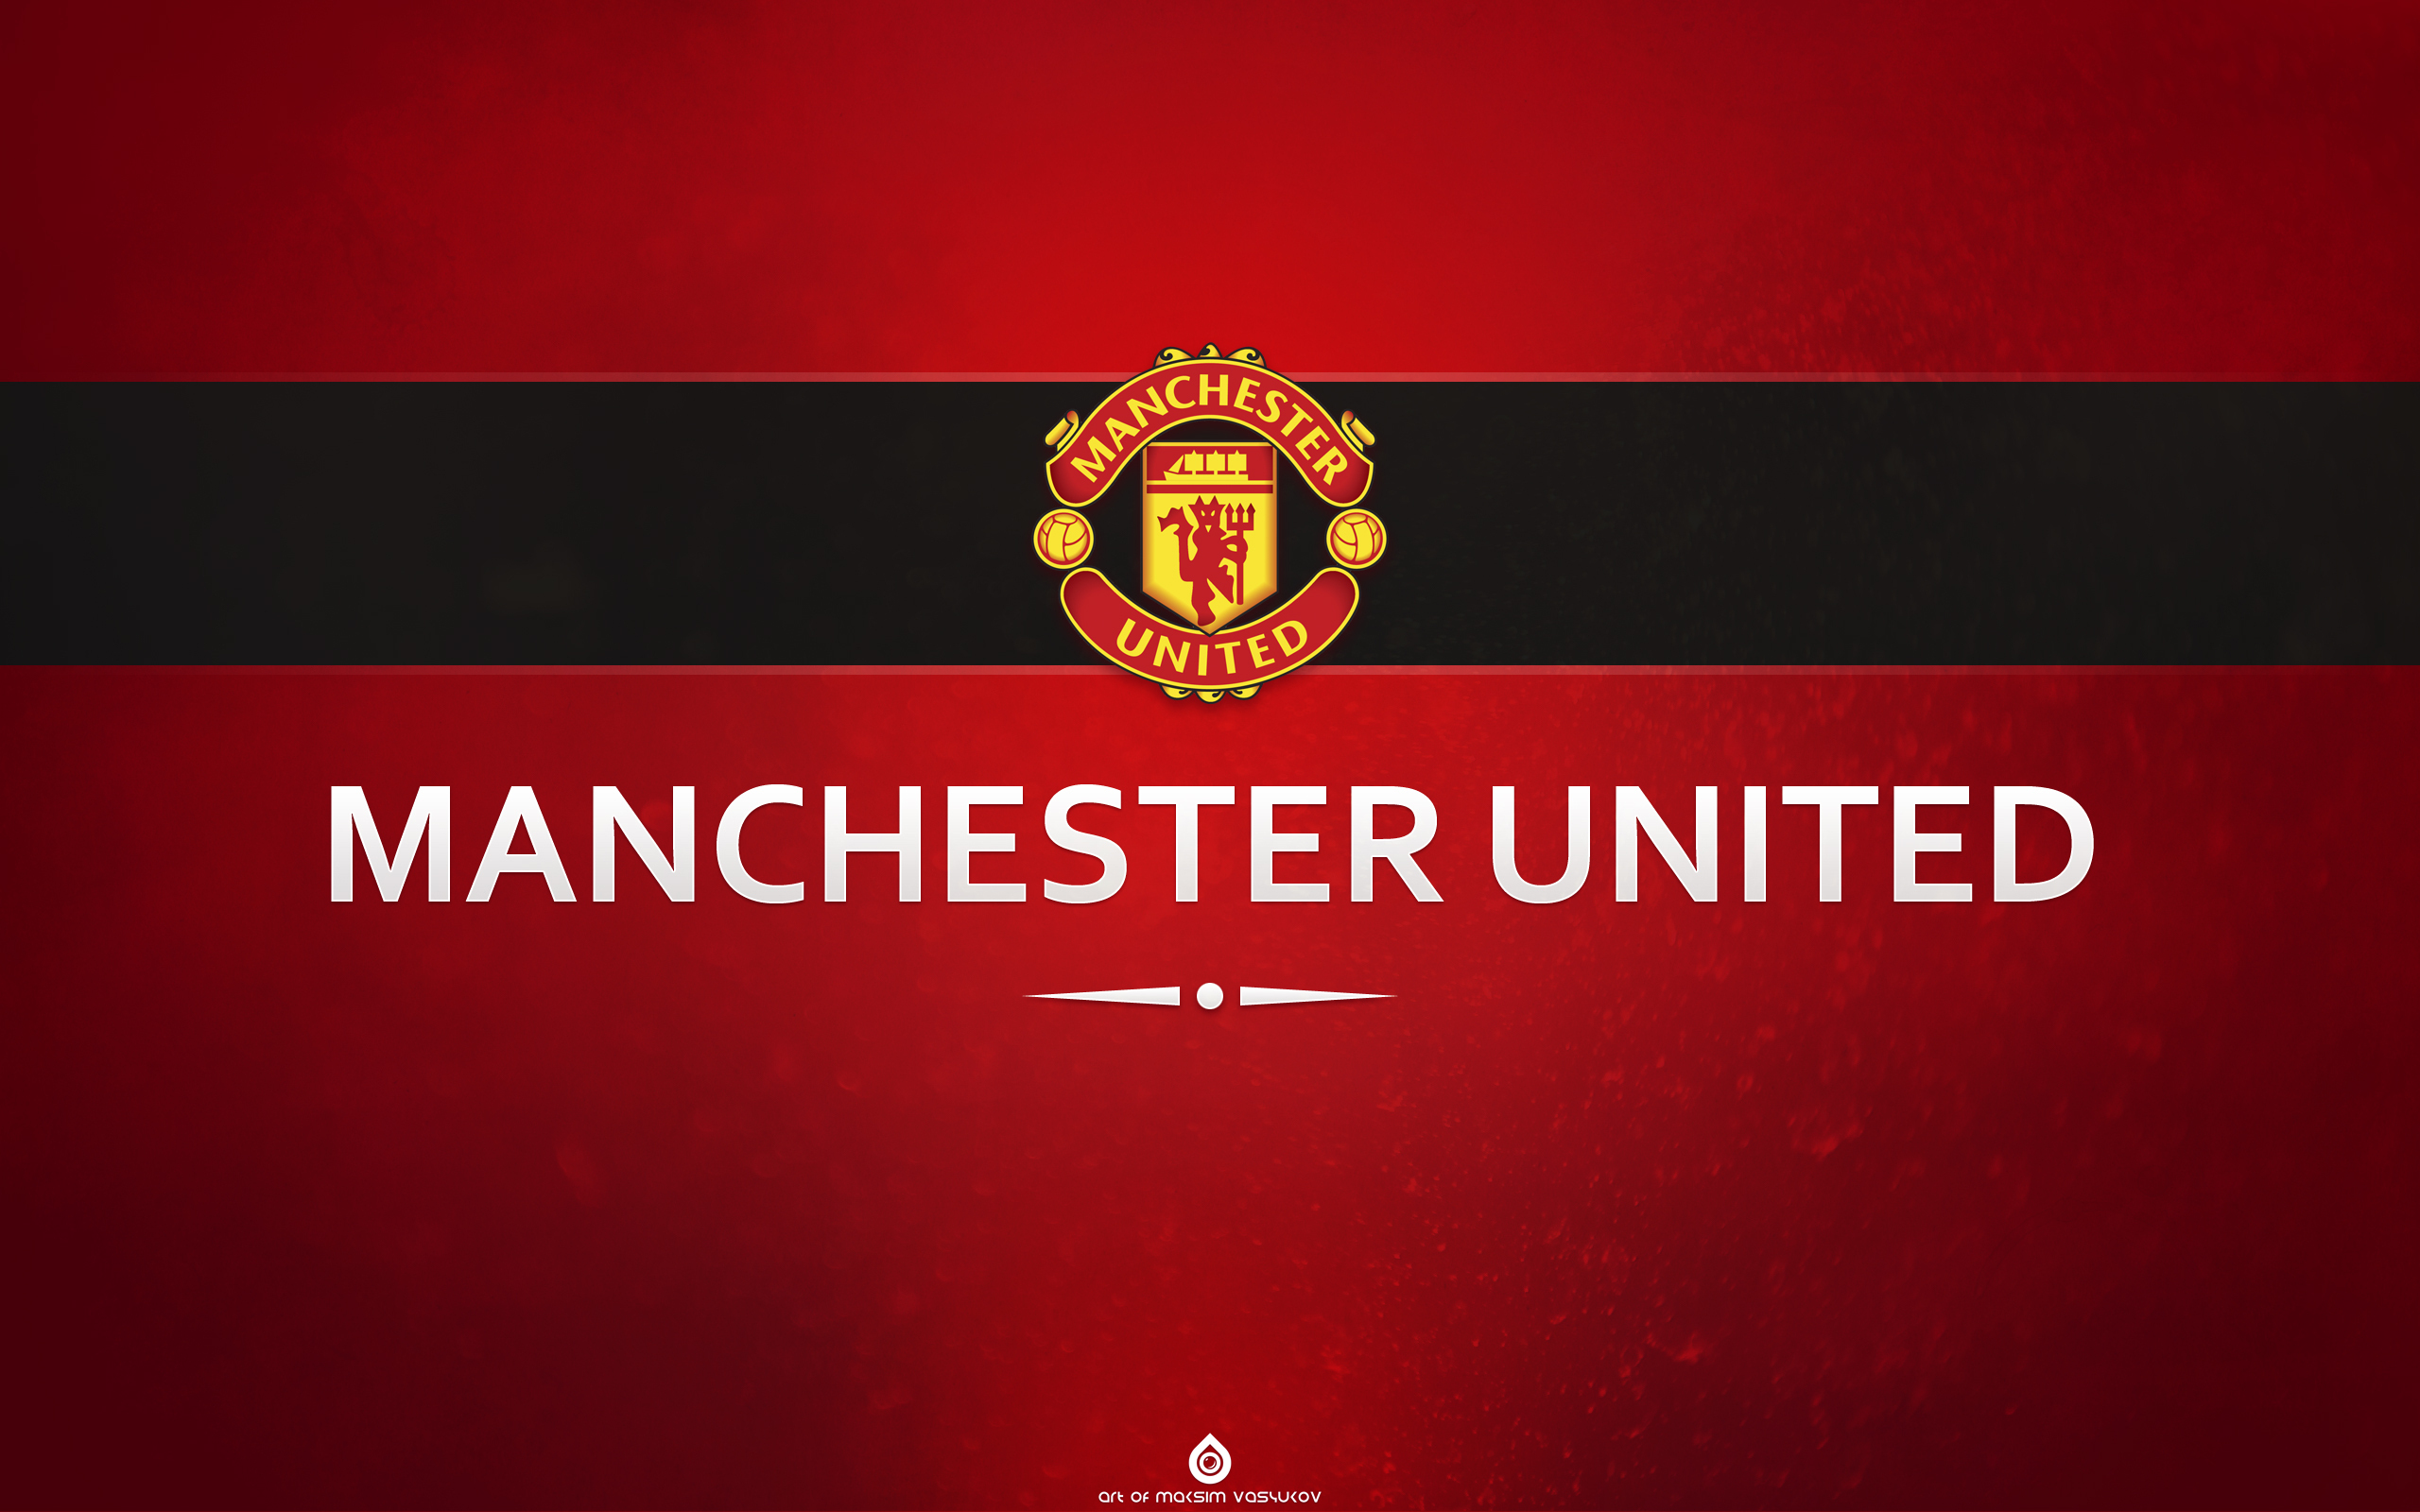 Manchester united fc logo